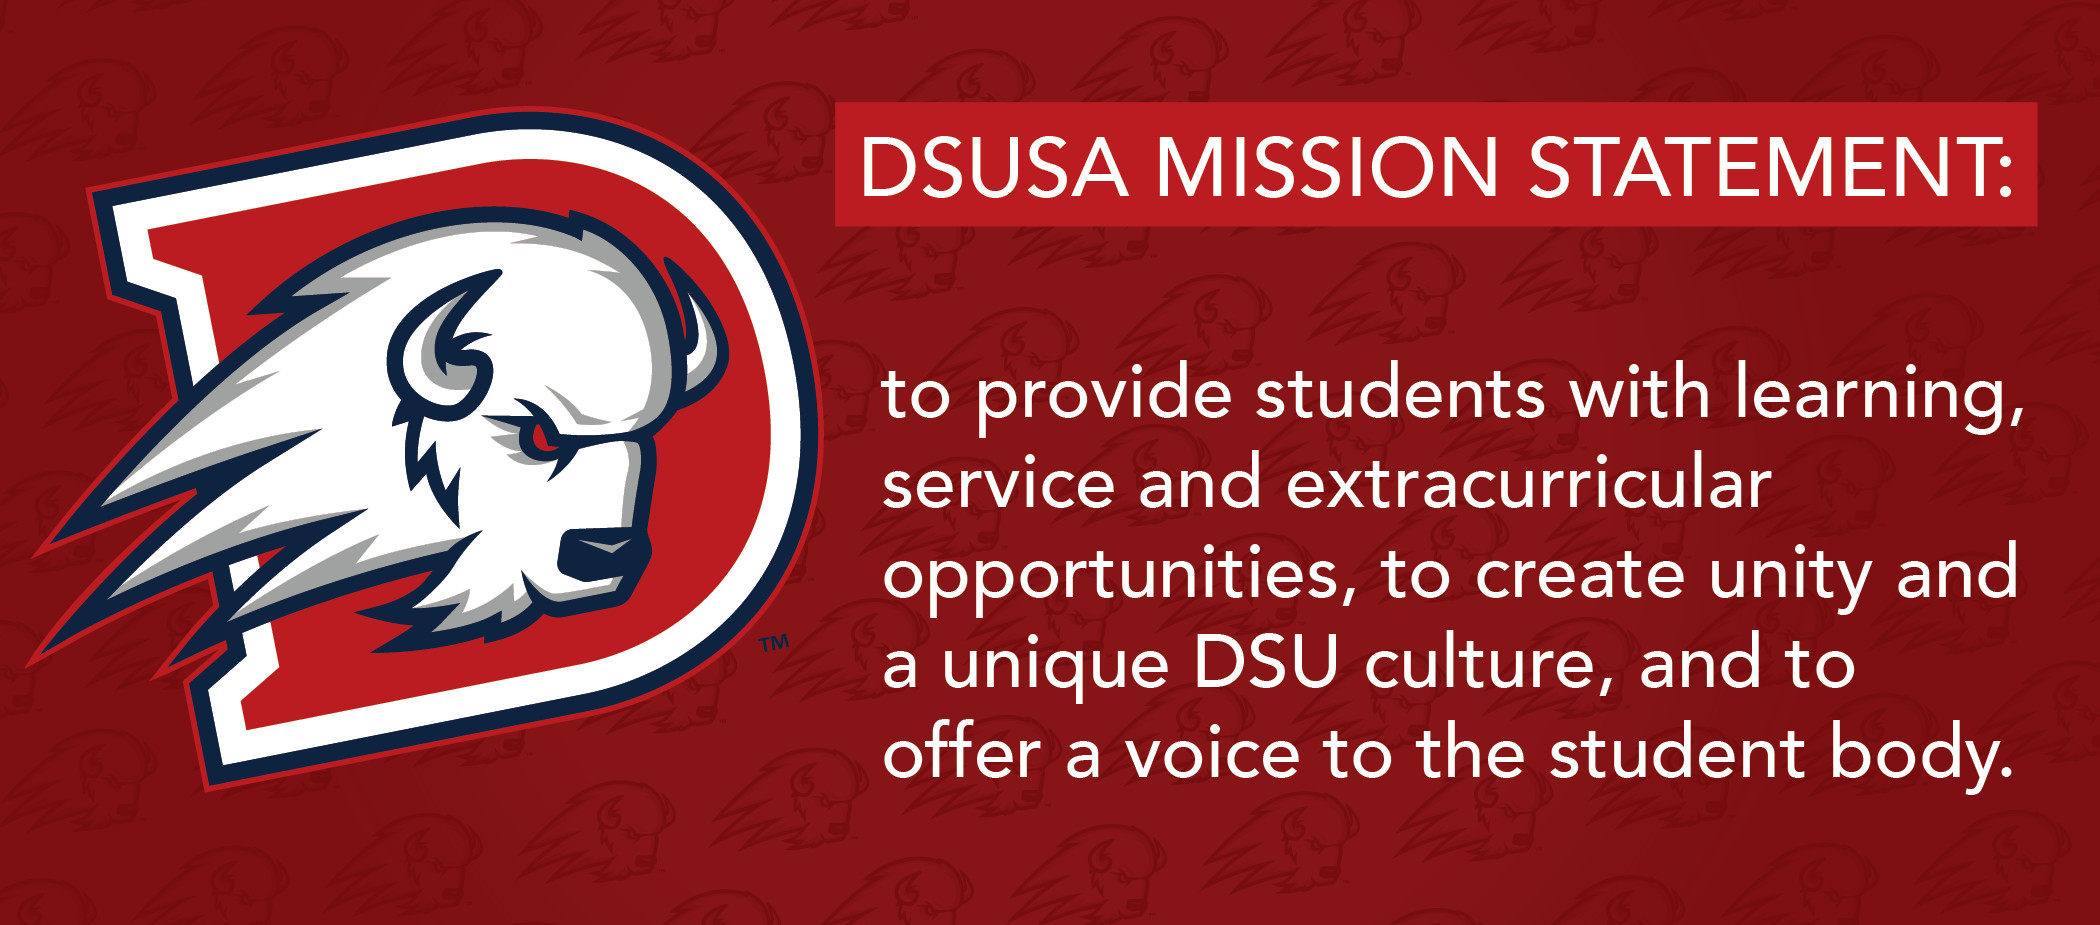 DSUSA elected students must meet position descriptions